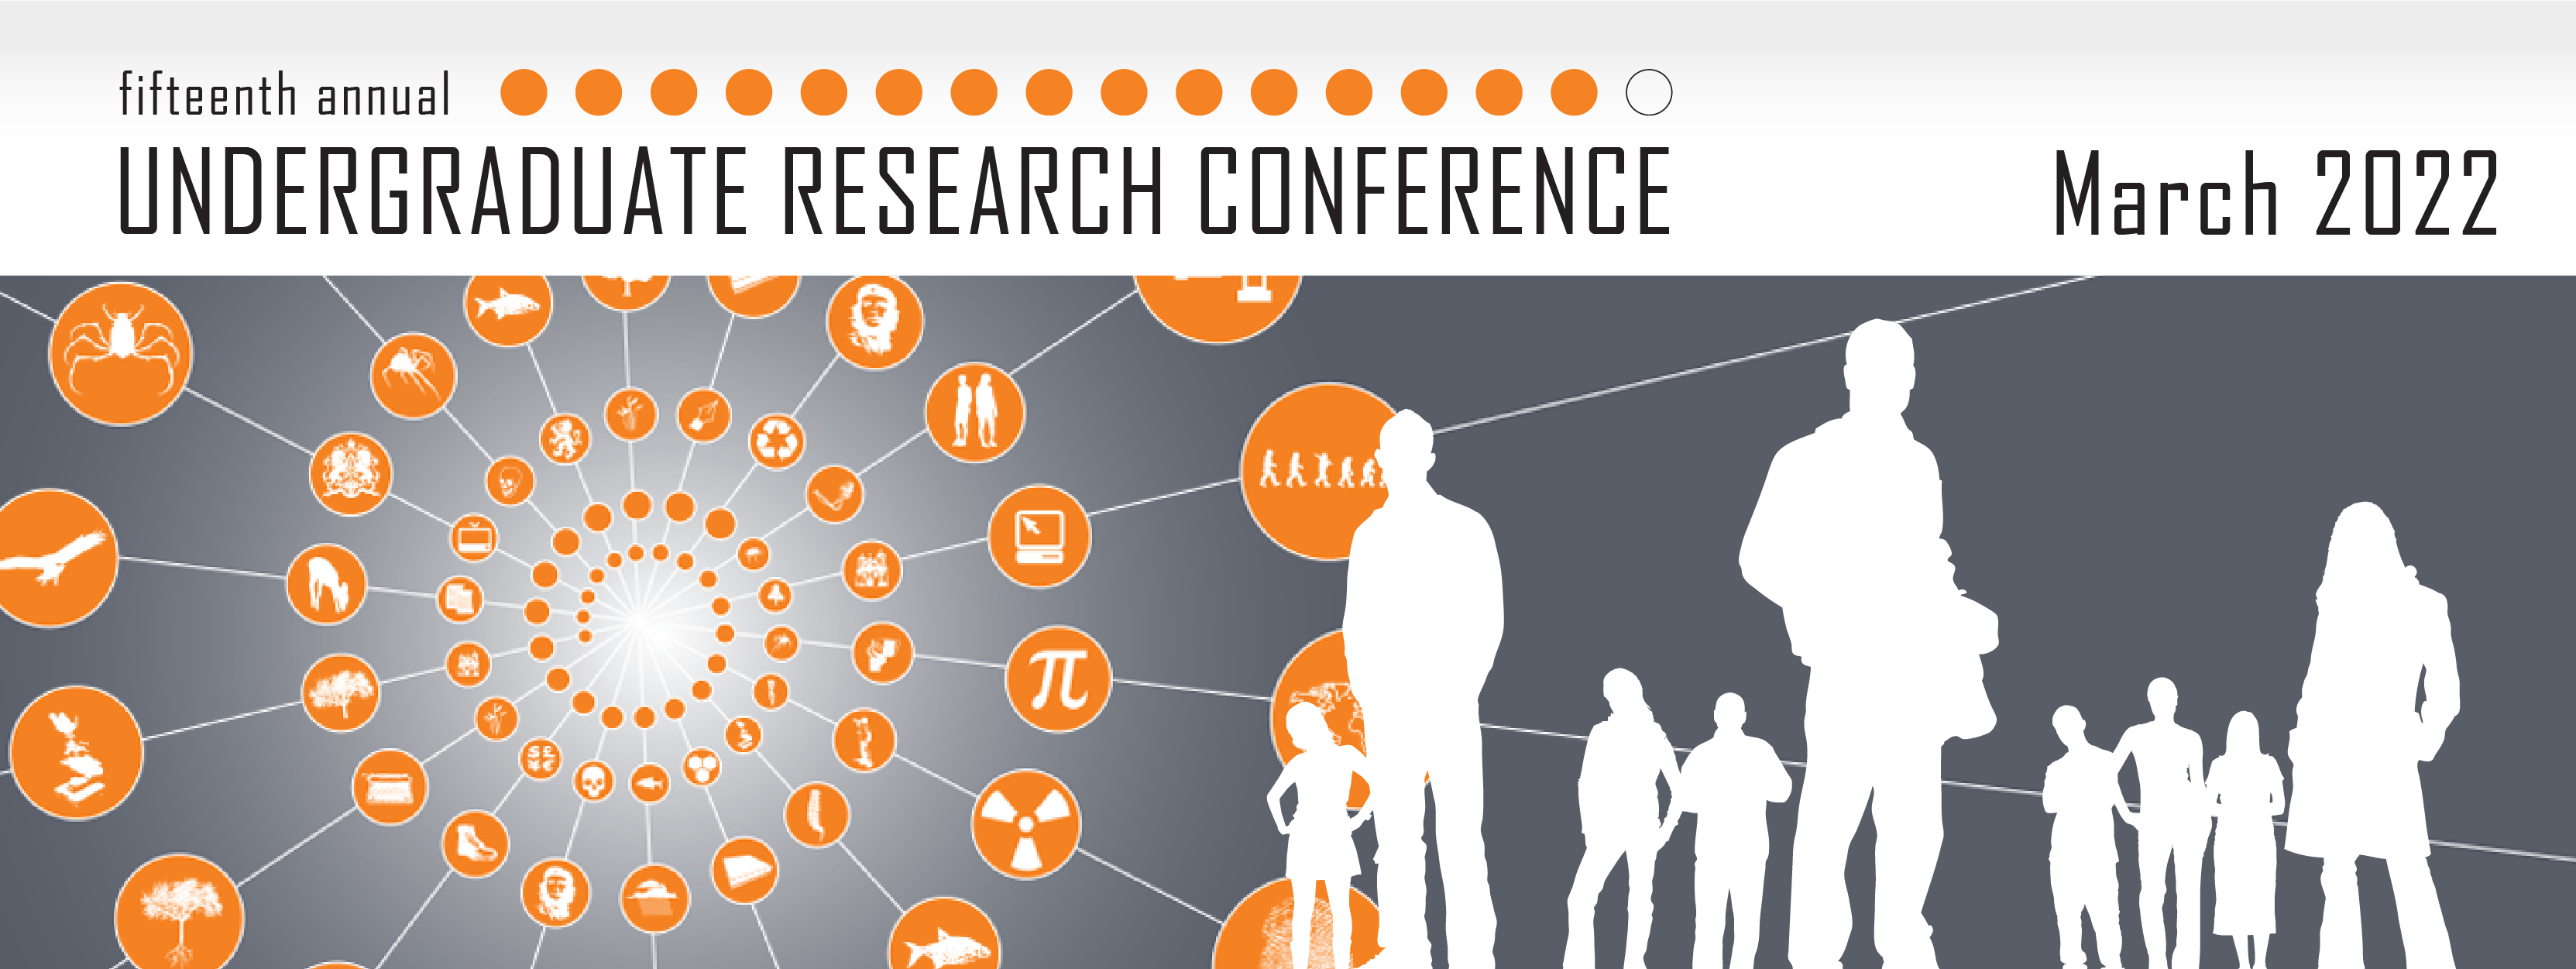 14th Annual Undergraduate Research Conference